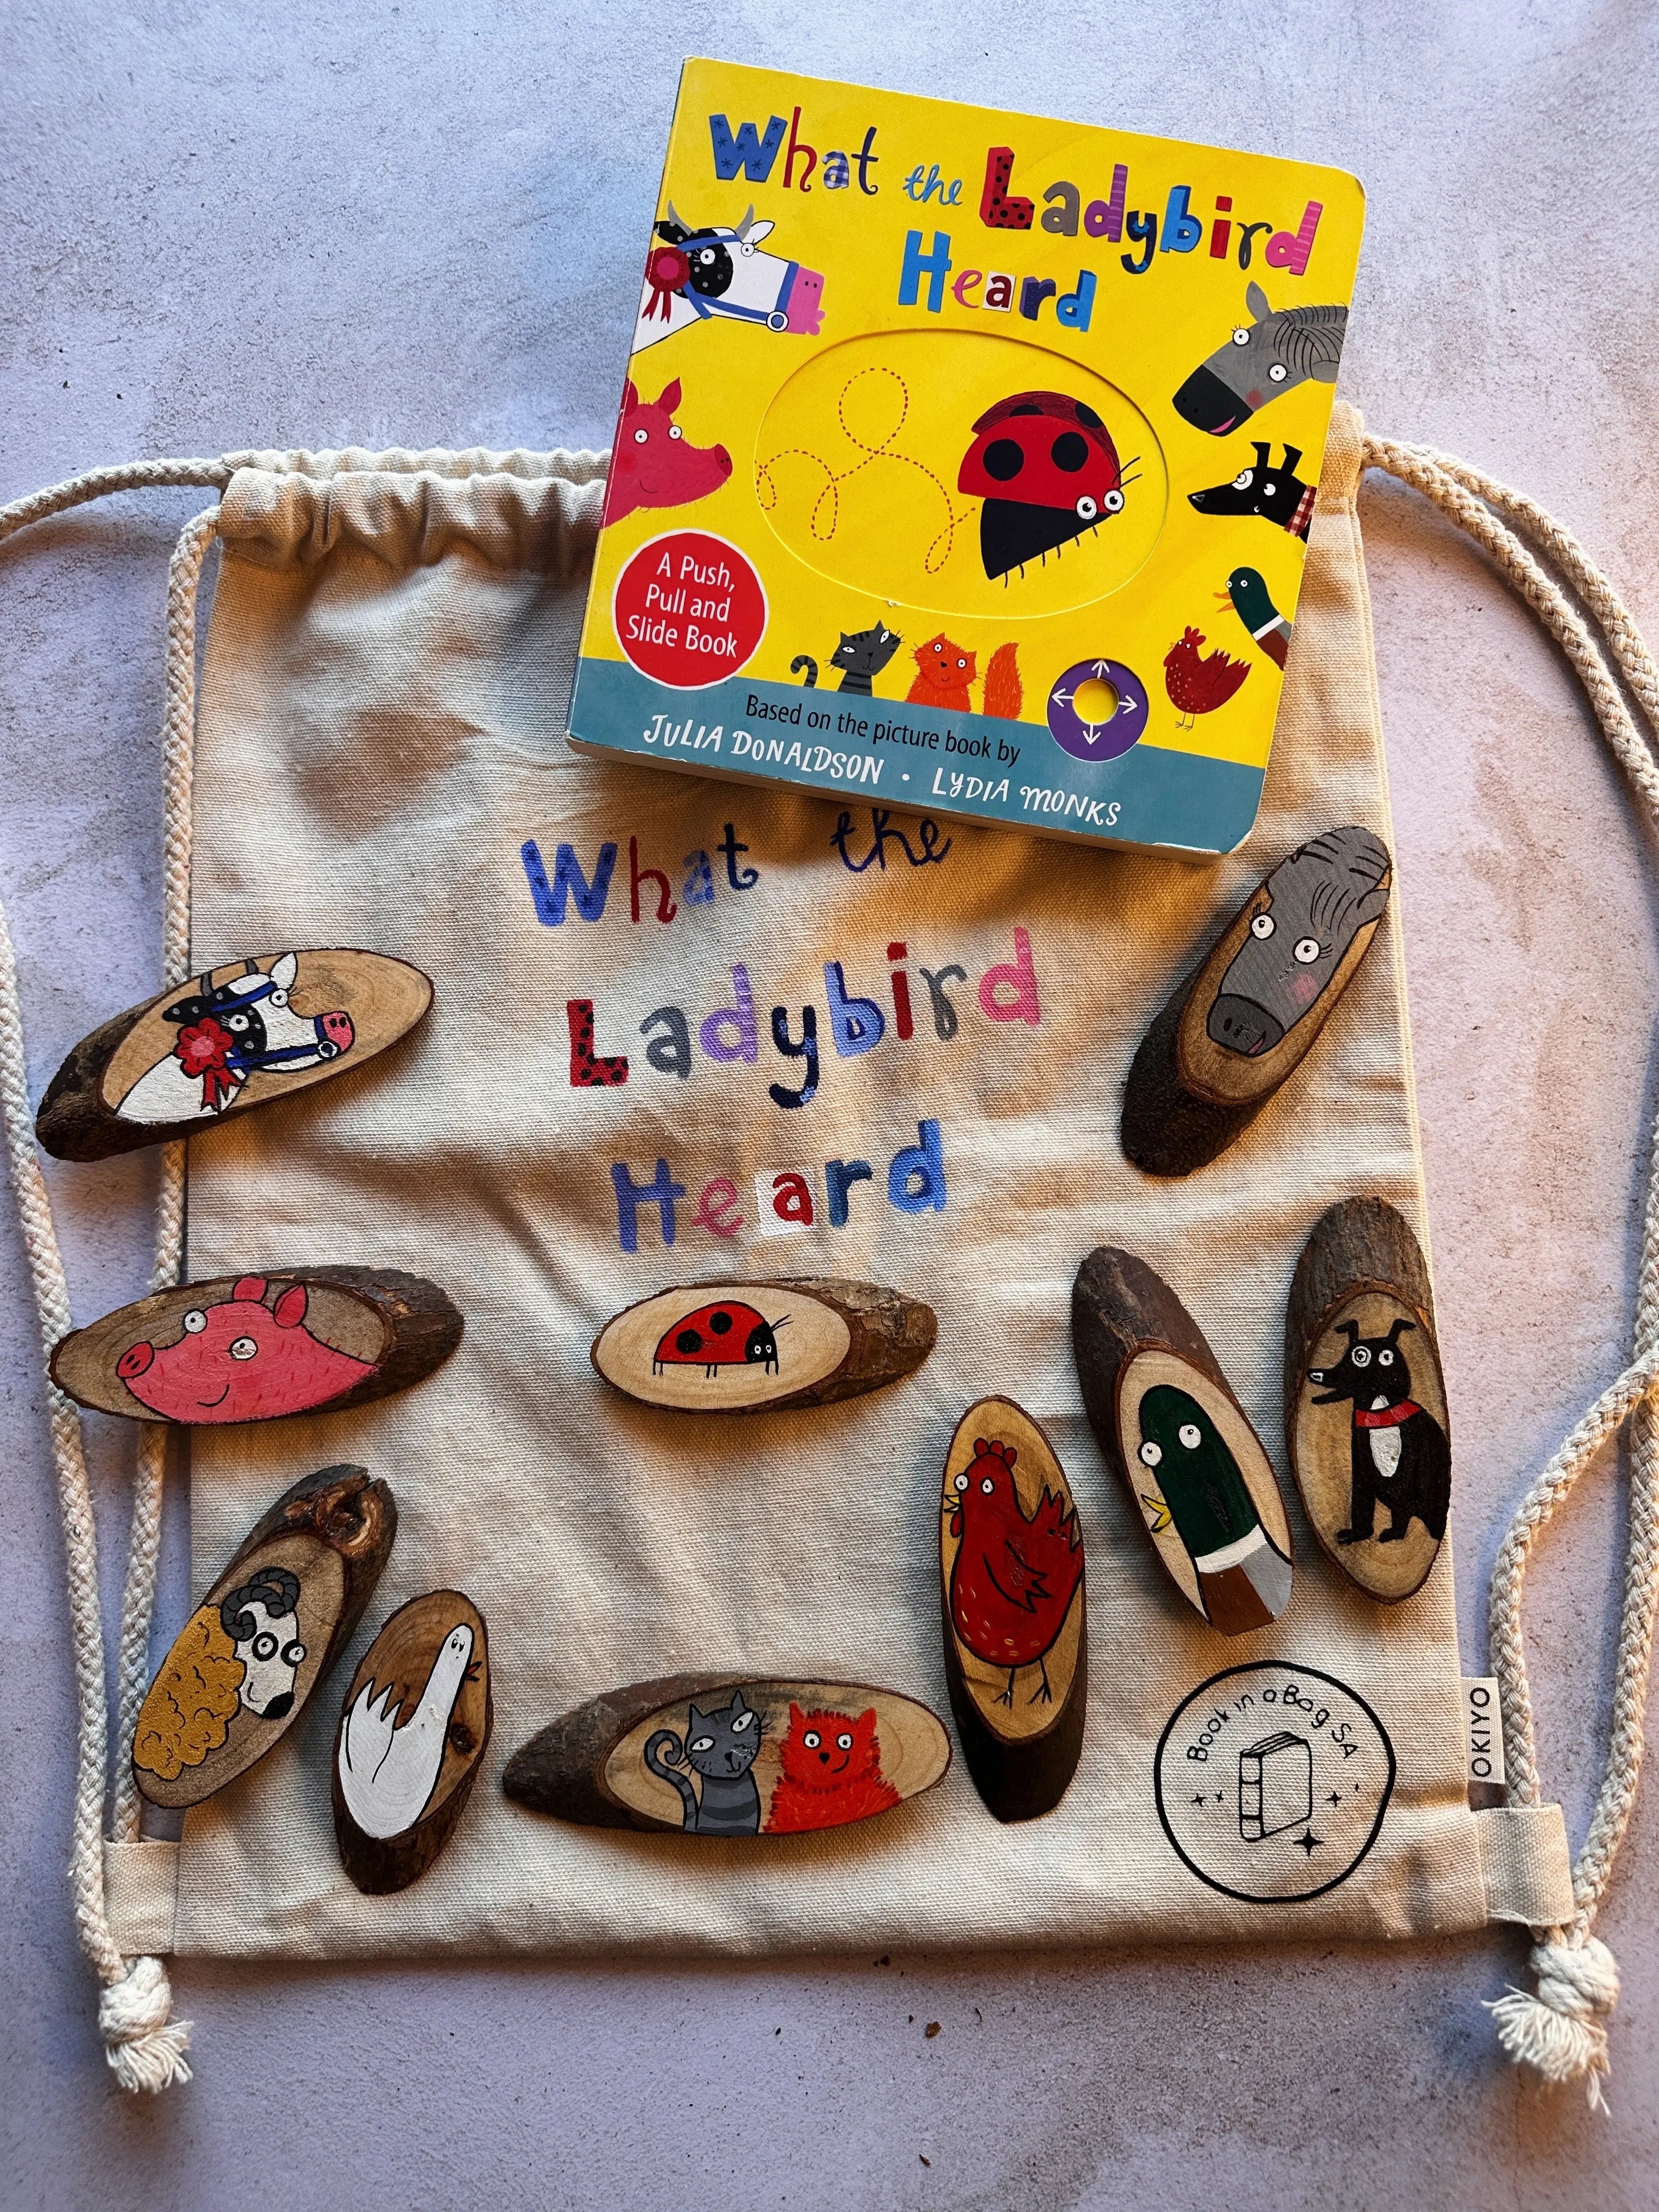 Book in a bag - What the lady bird heard Book in a bag